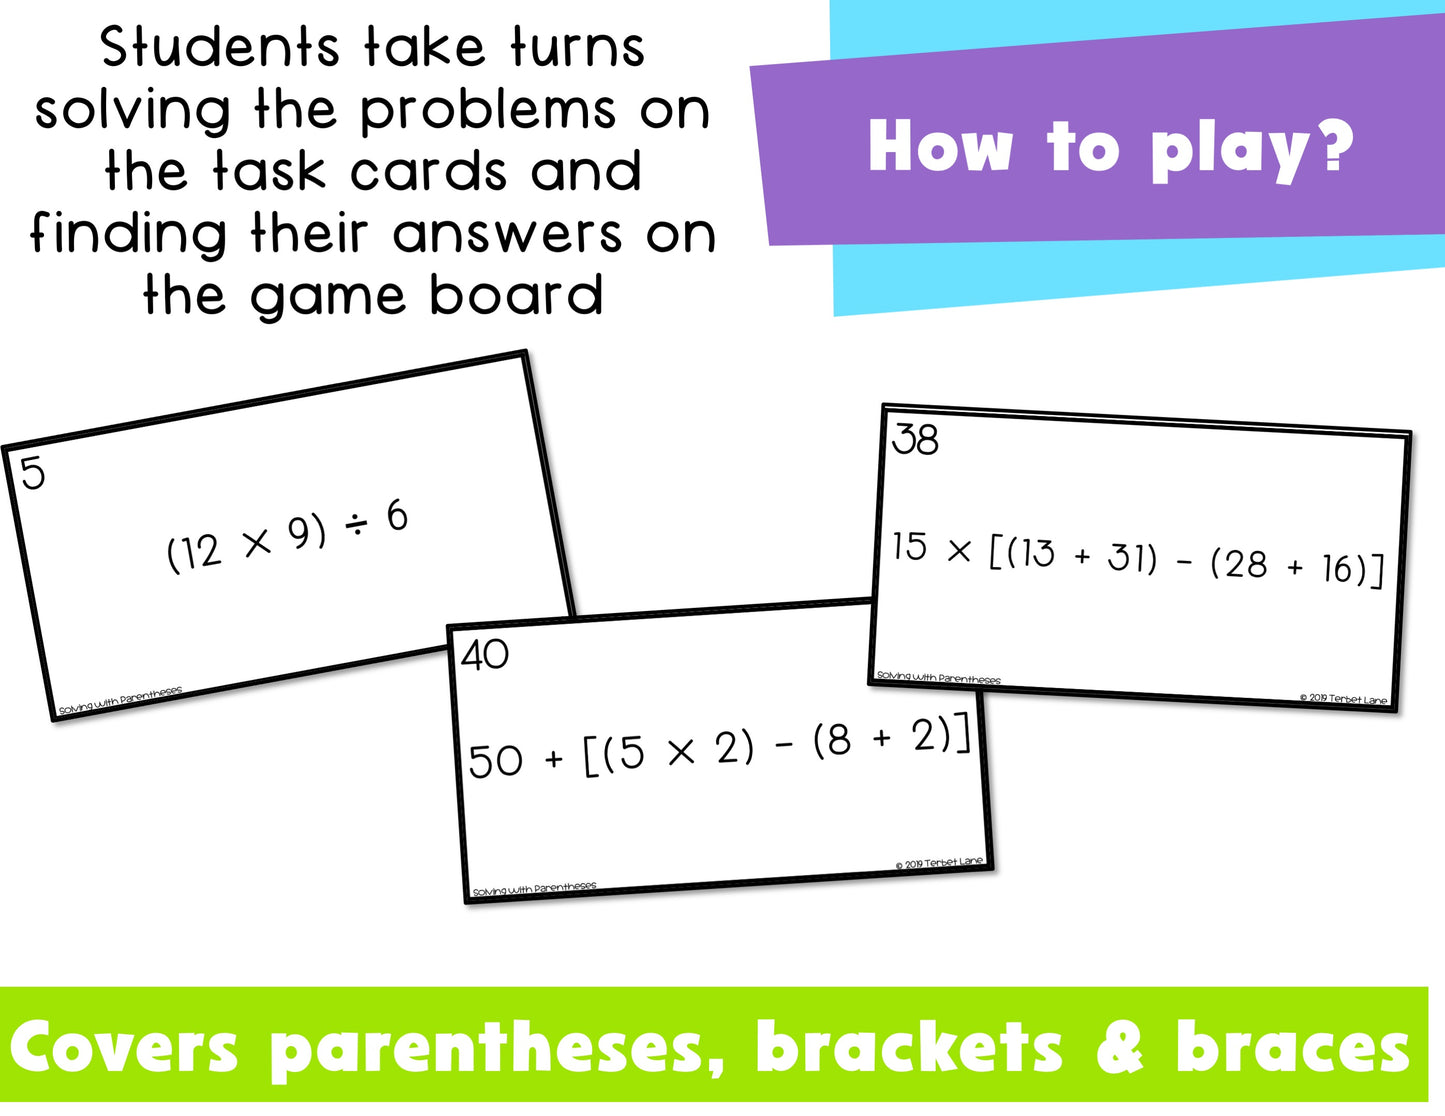 Order of Operations Math Game | Parentheses Brackets Braces | PEMDAS